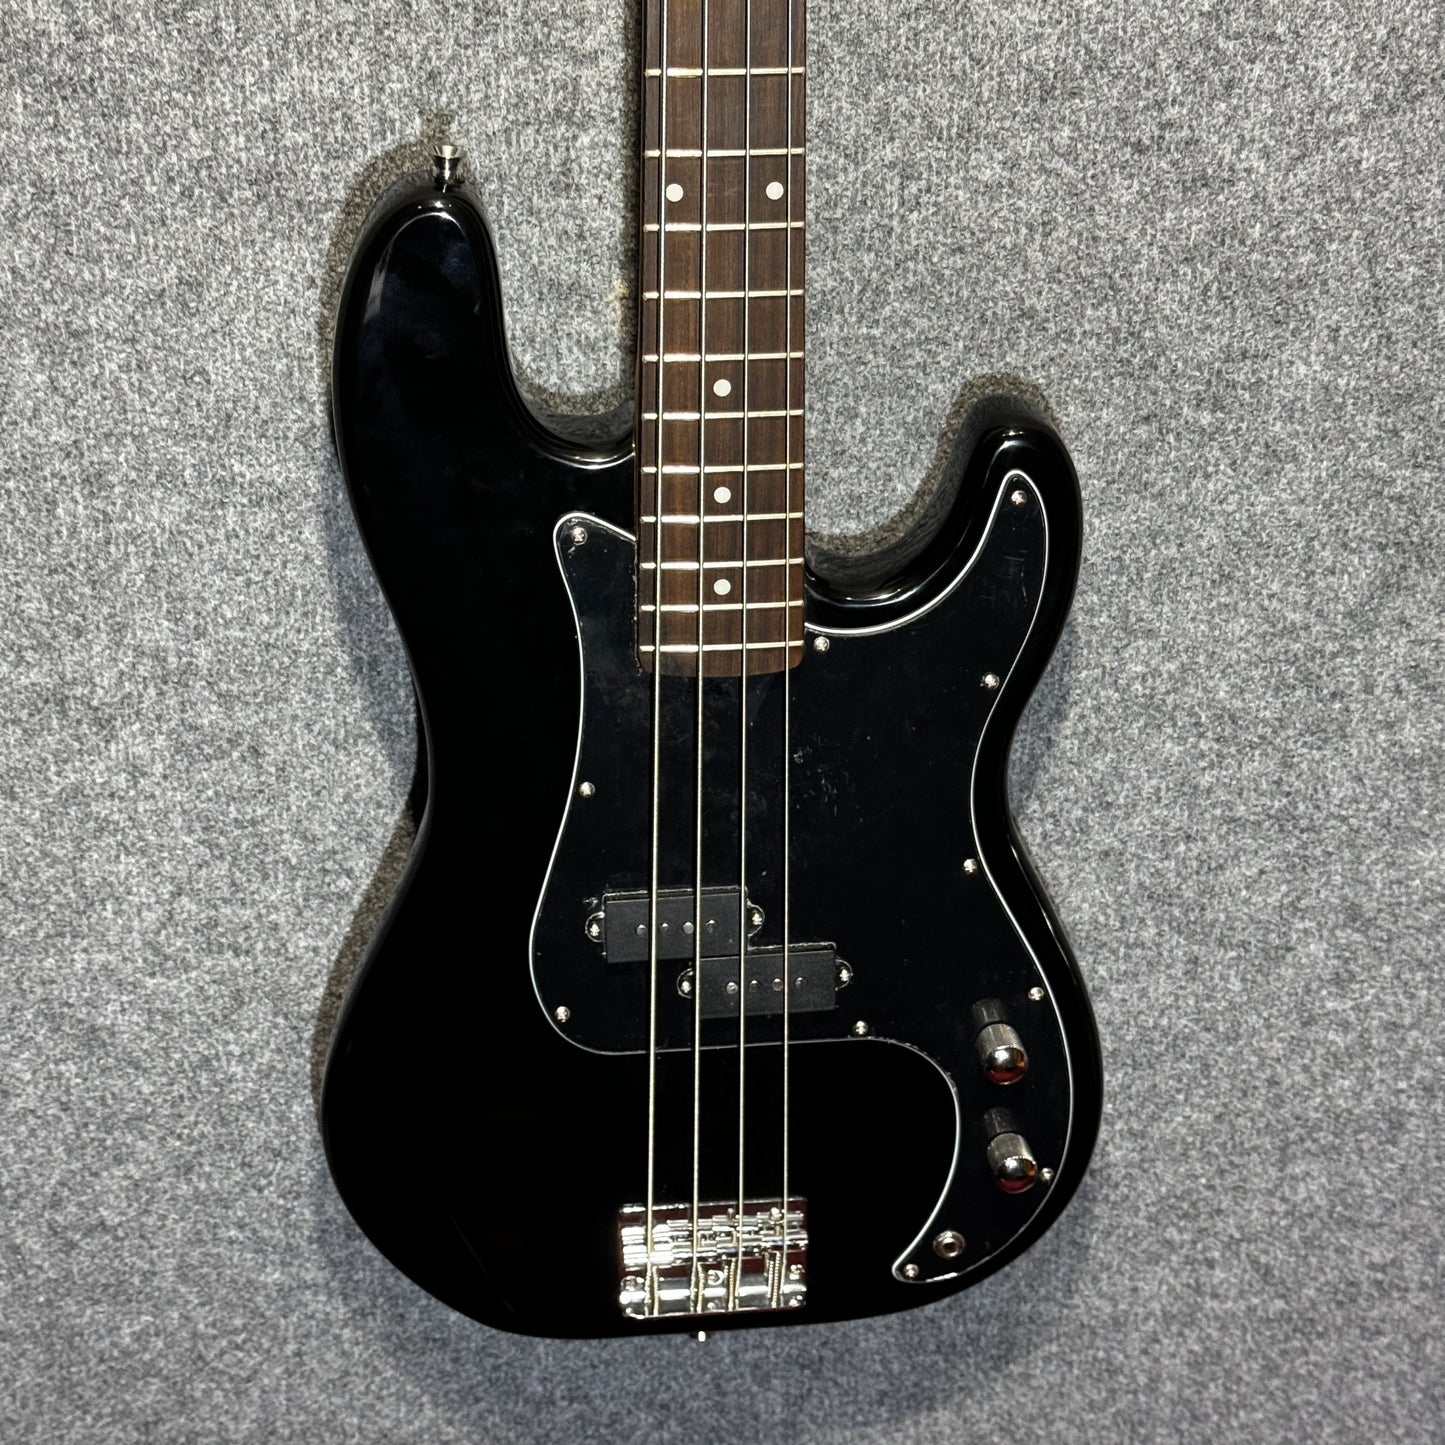 Stagg P Series Bass Guitar Black